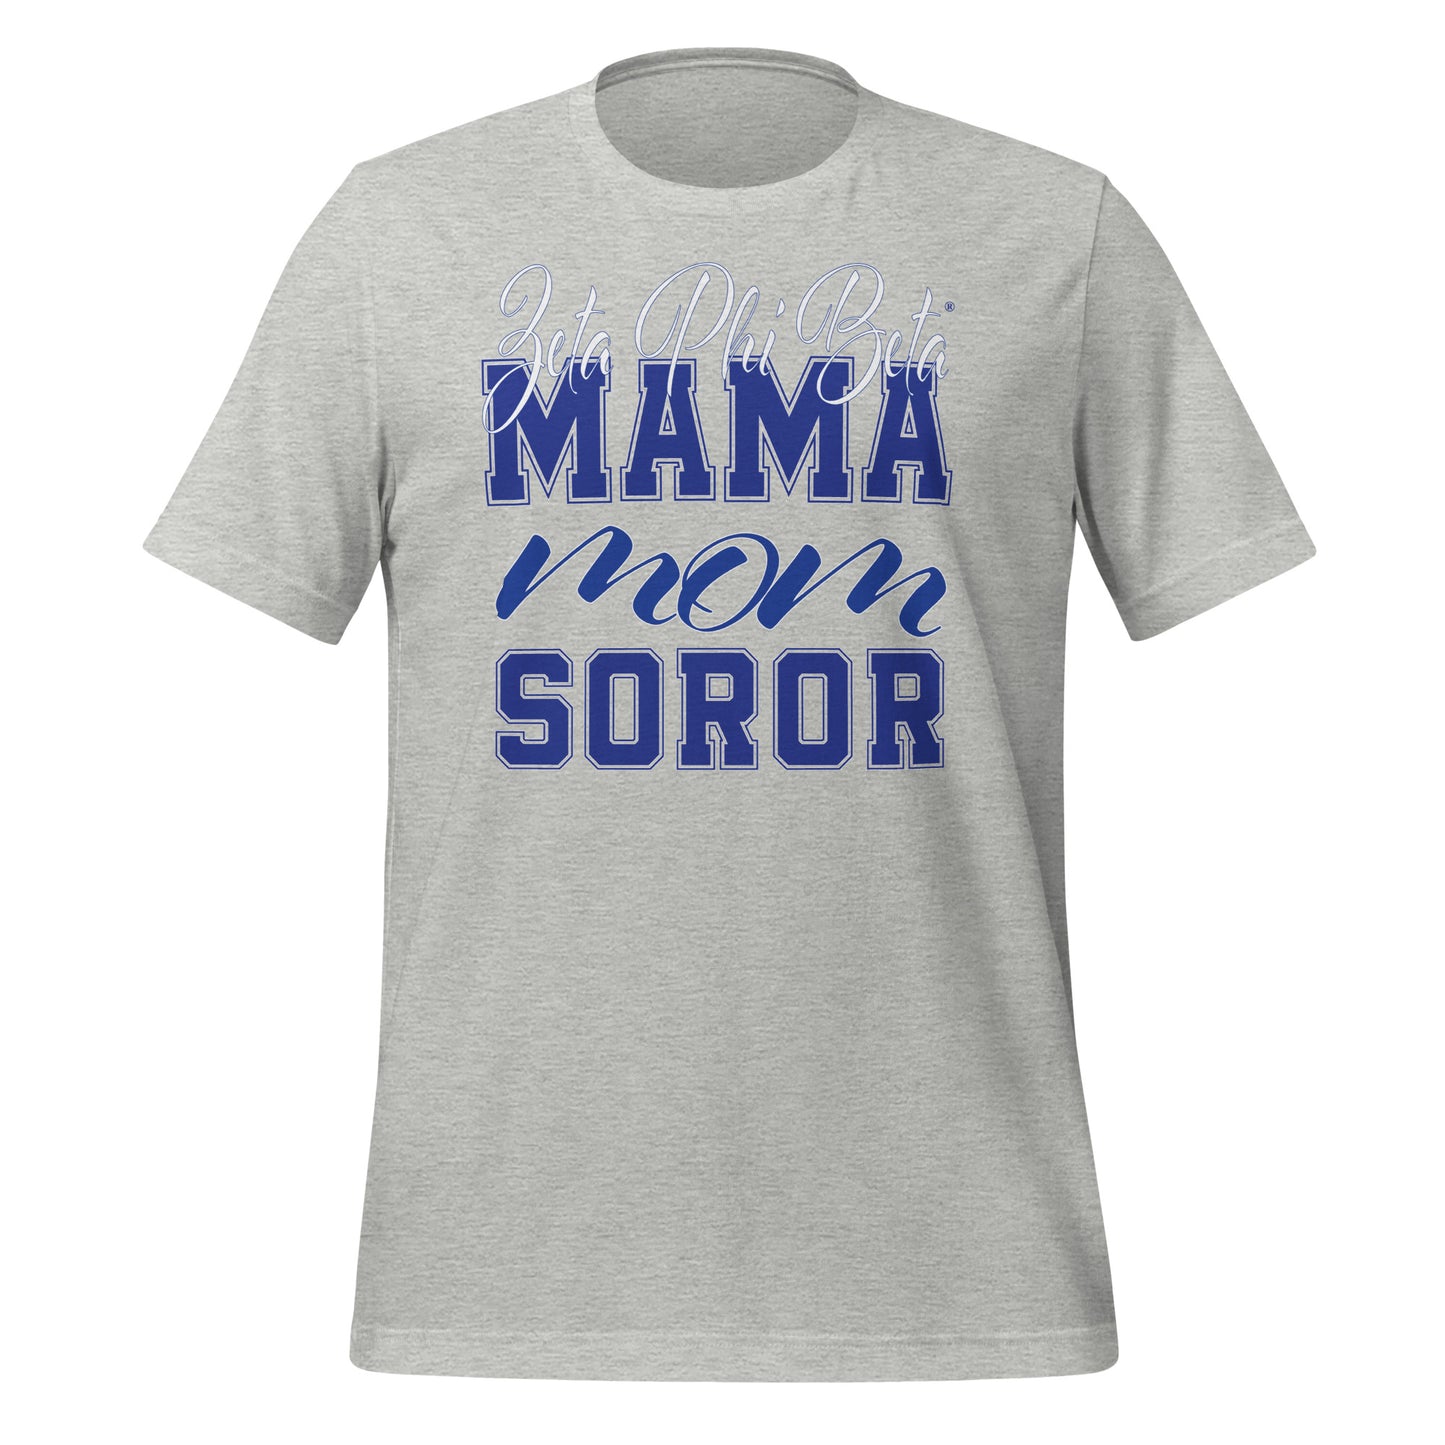 Zeta MAMA T-Shirt